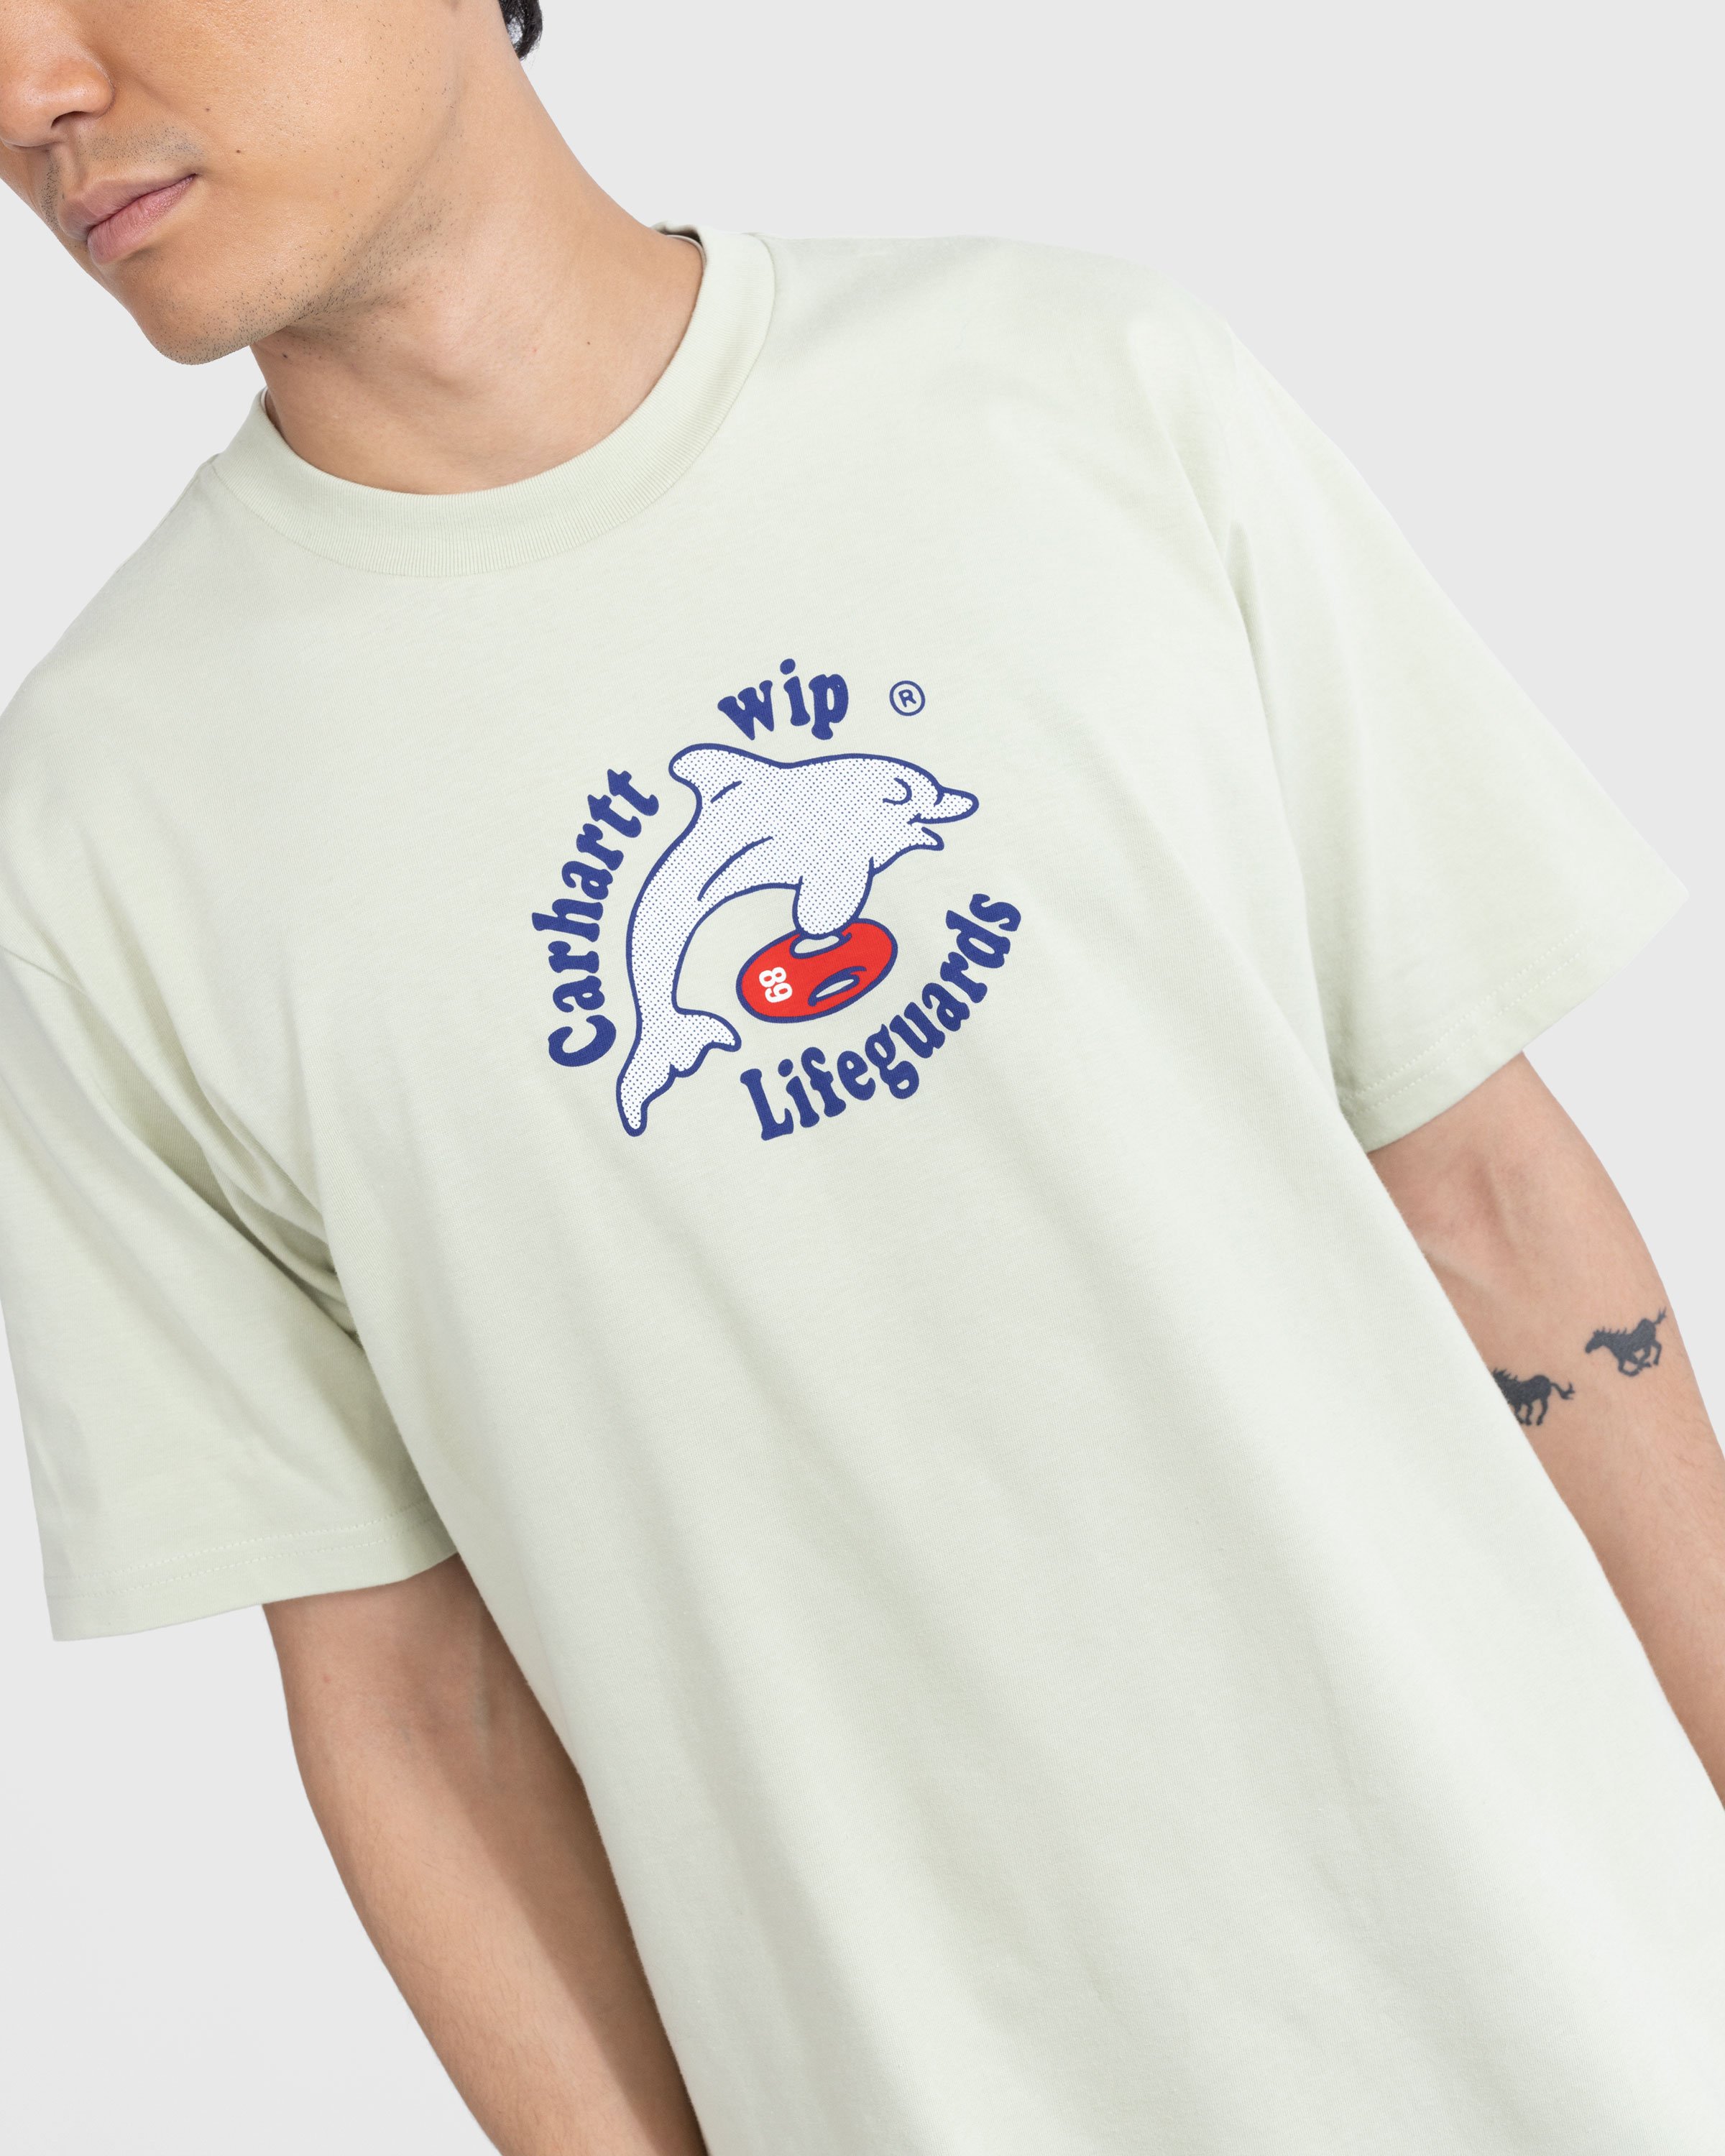 Carhartt WIP - Lifeguards T-Shirt Light Blue - Clothing - White - Image 2